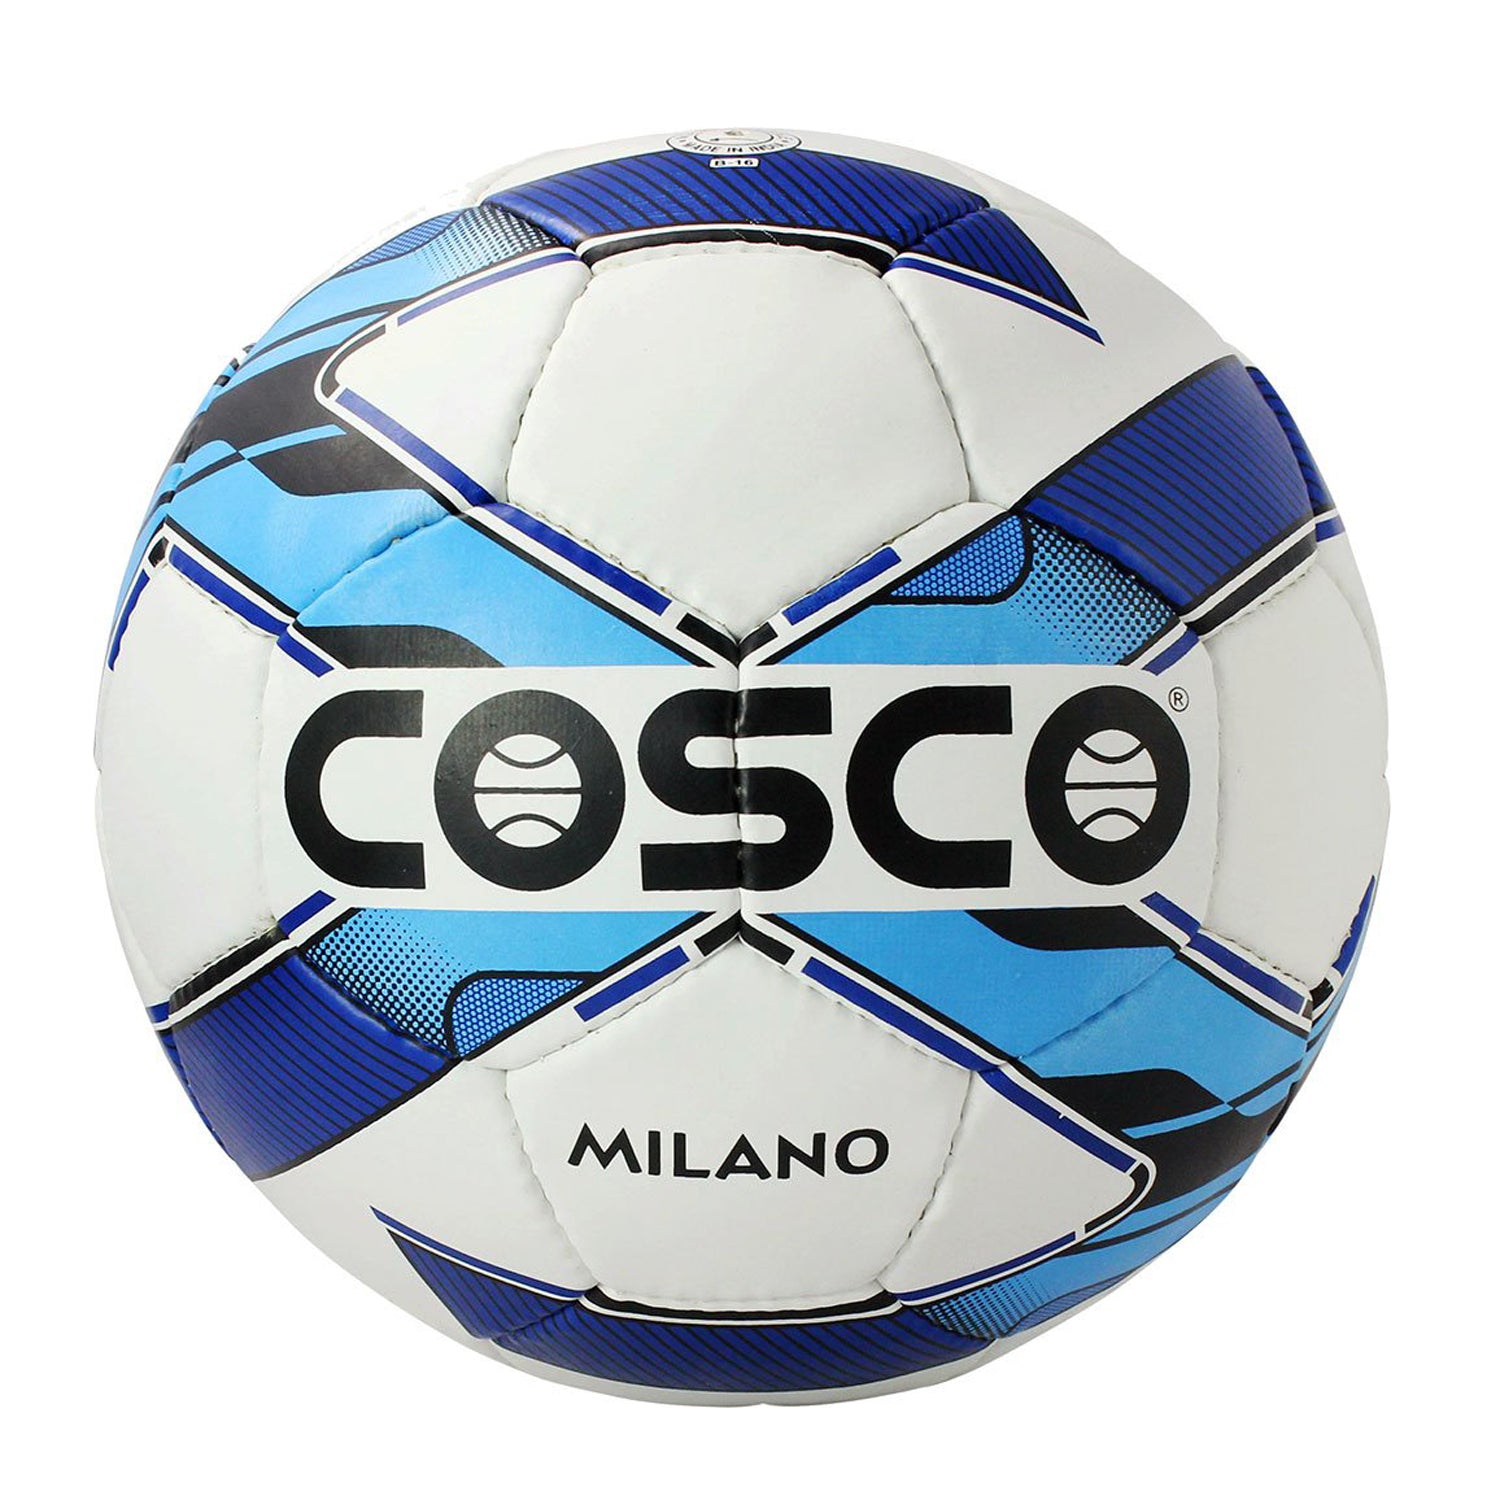 Cosco Milano Football, White/Blue (Size 4) - Best Price online Prokicksports.com